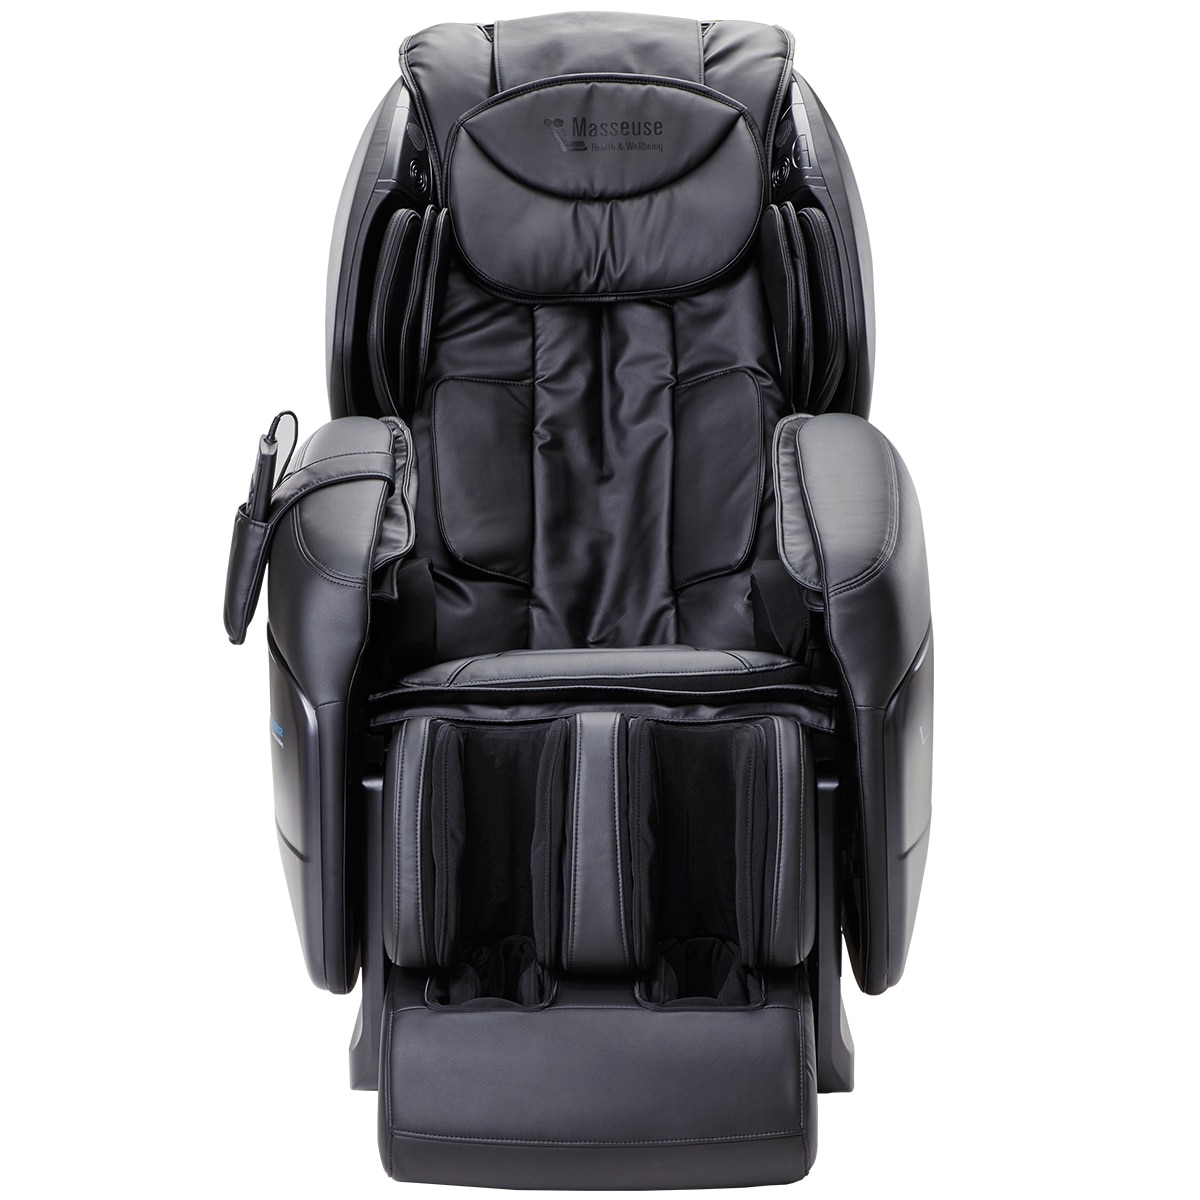 Masseuse Massage Chairs Platinum + Massage Chairs - Black